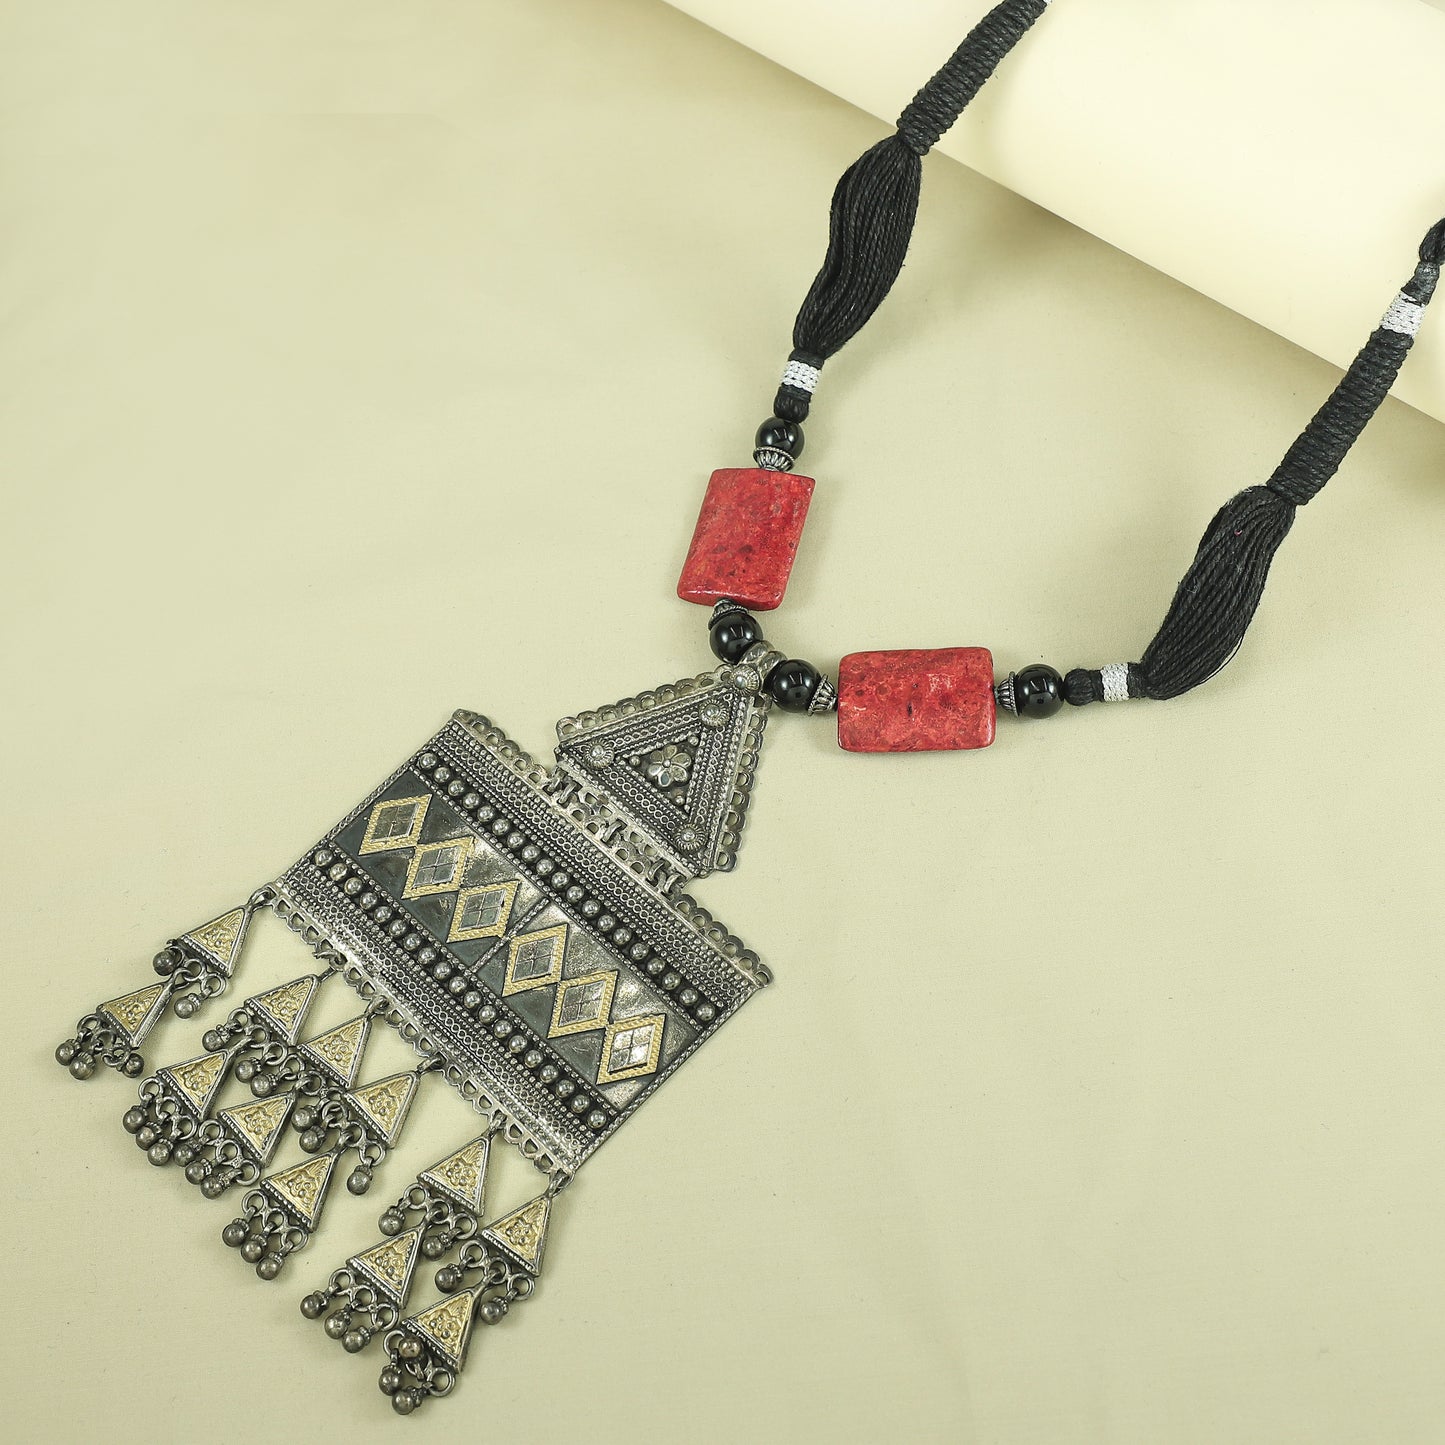 Vanya Red-Black Dual Tone Thread Tribal Silver Necklace